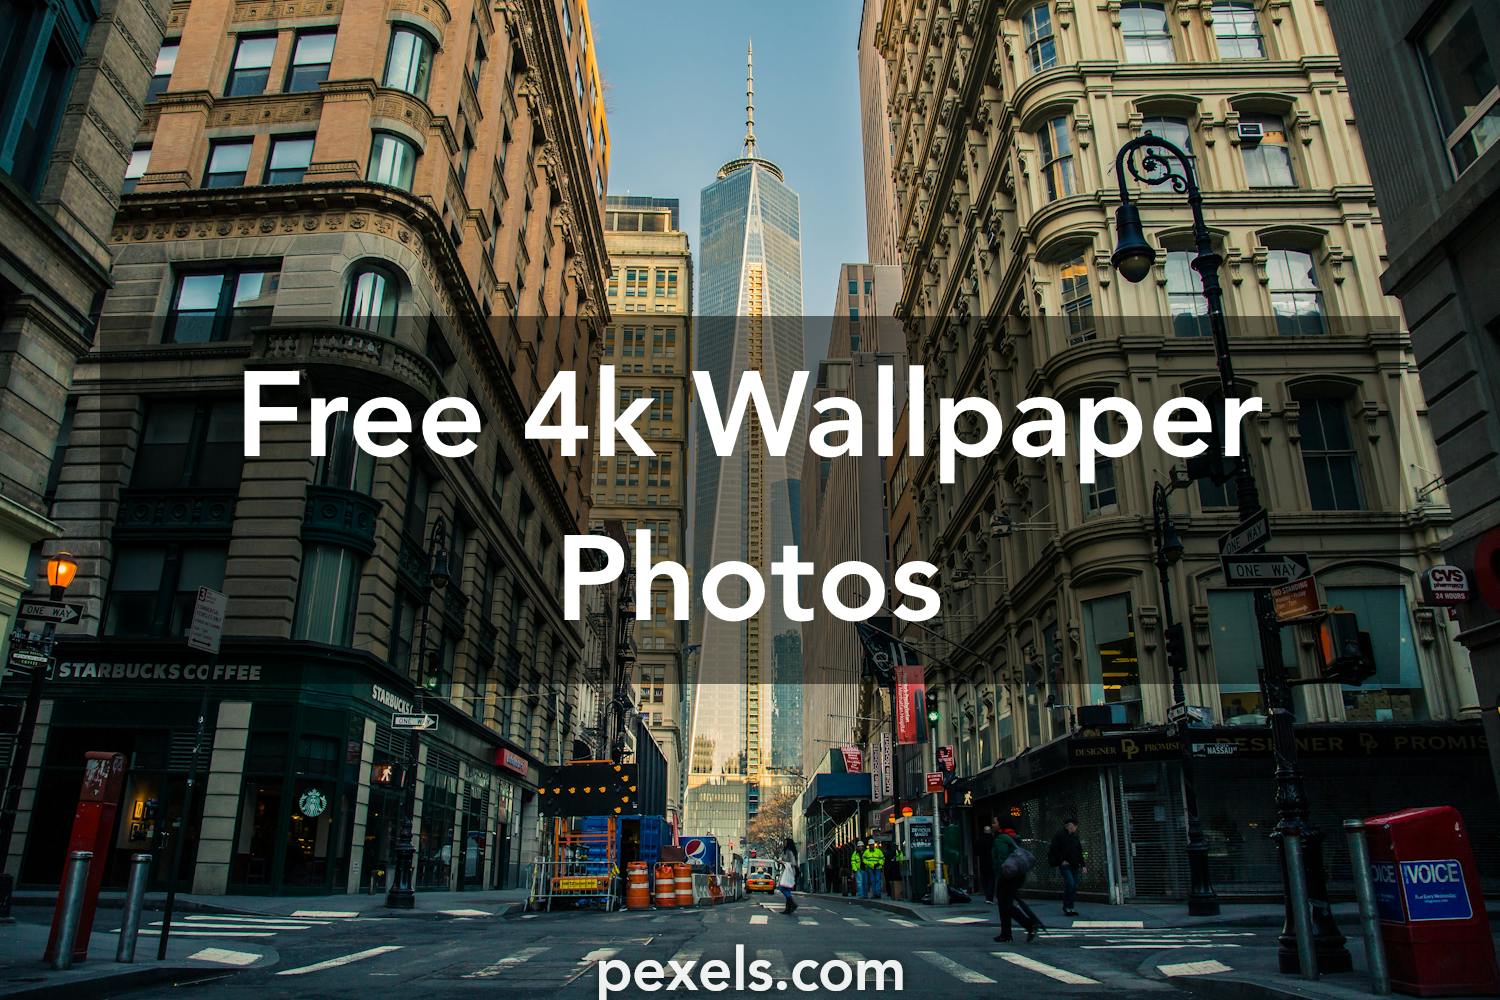 Free stock photos of 4k wallpaper · Pexels